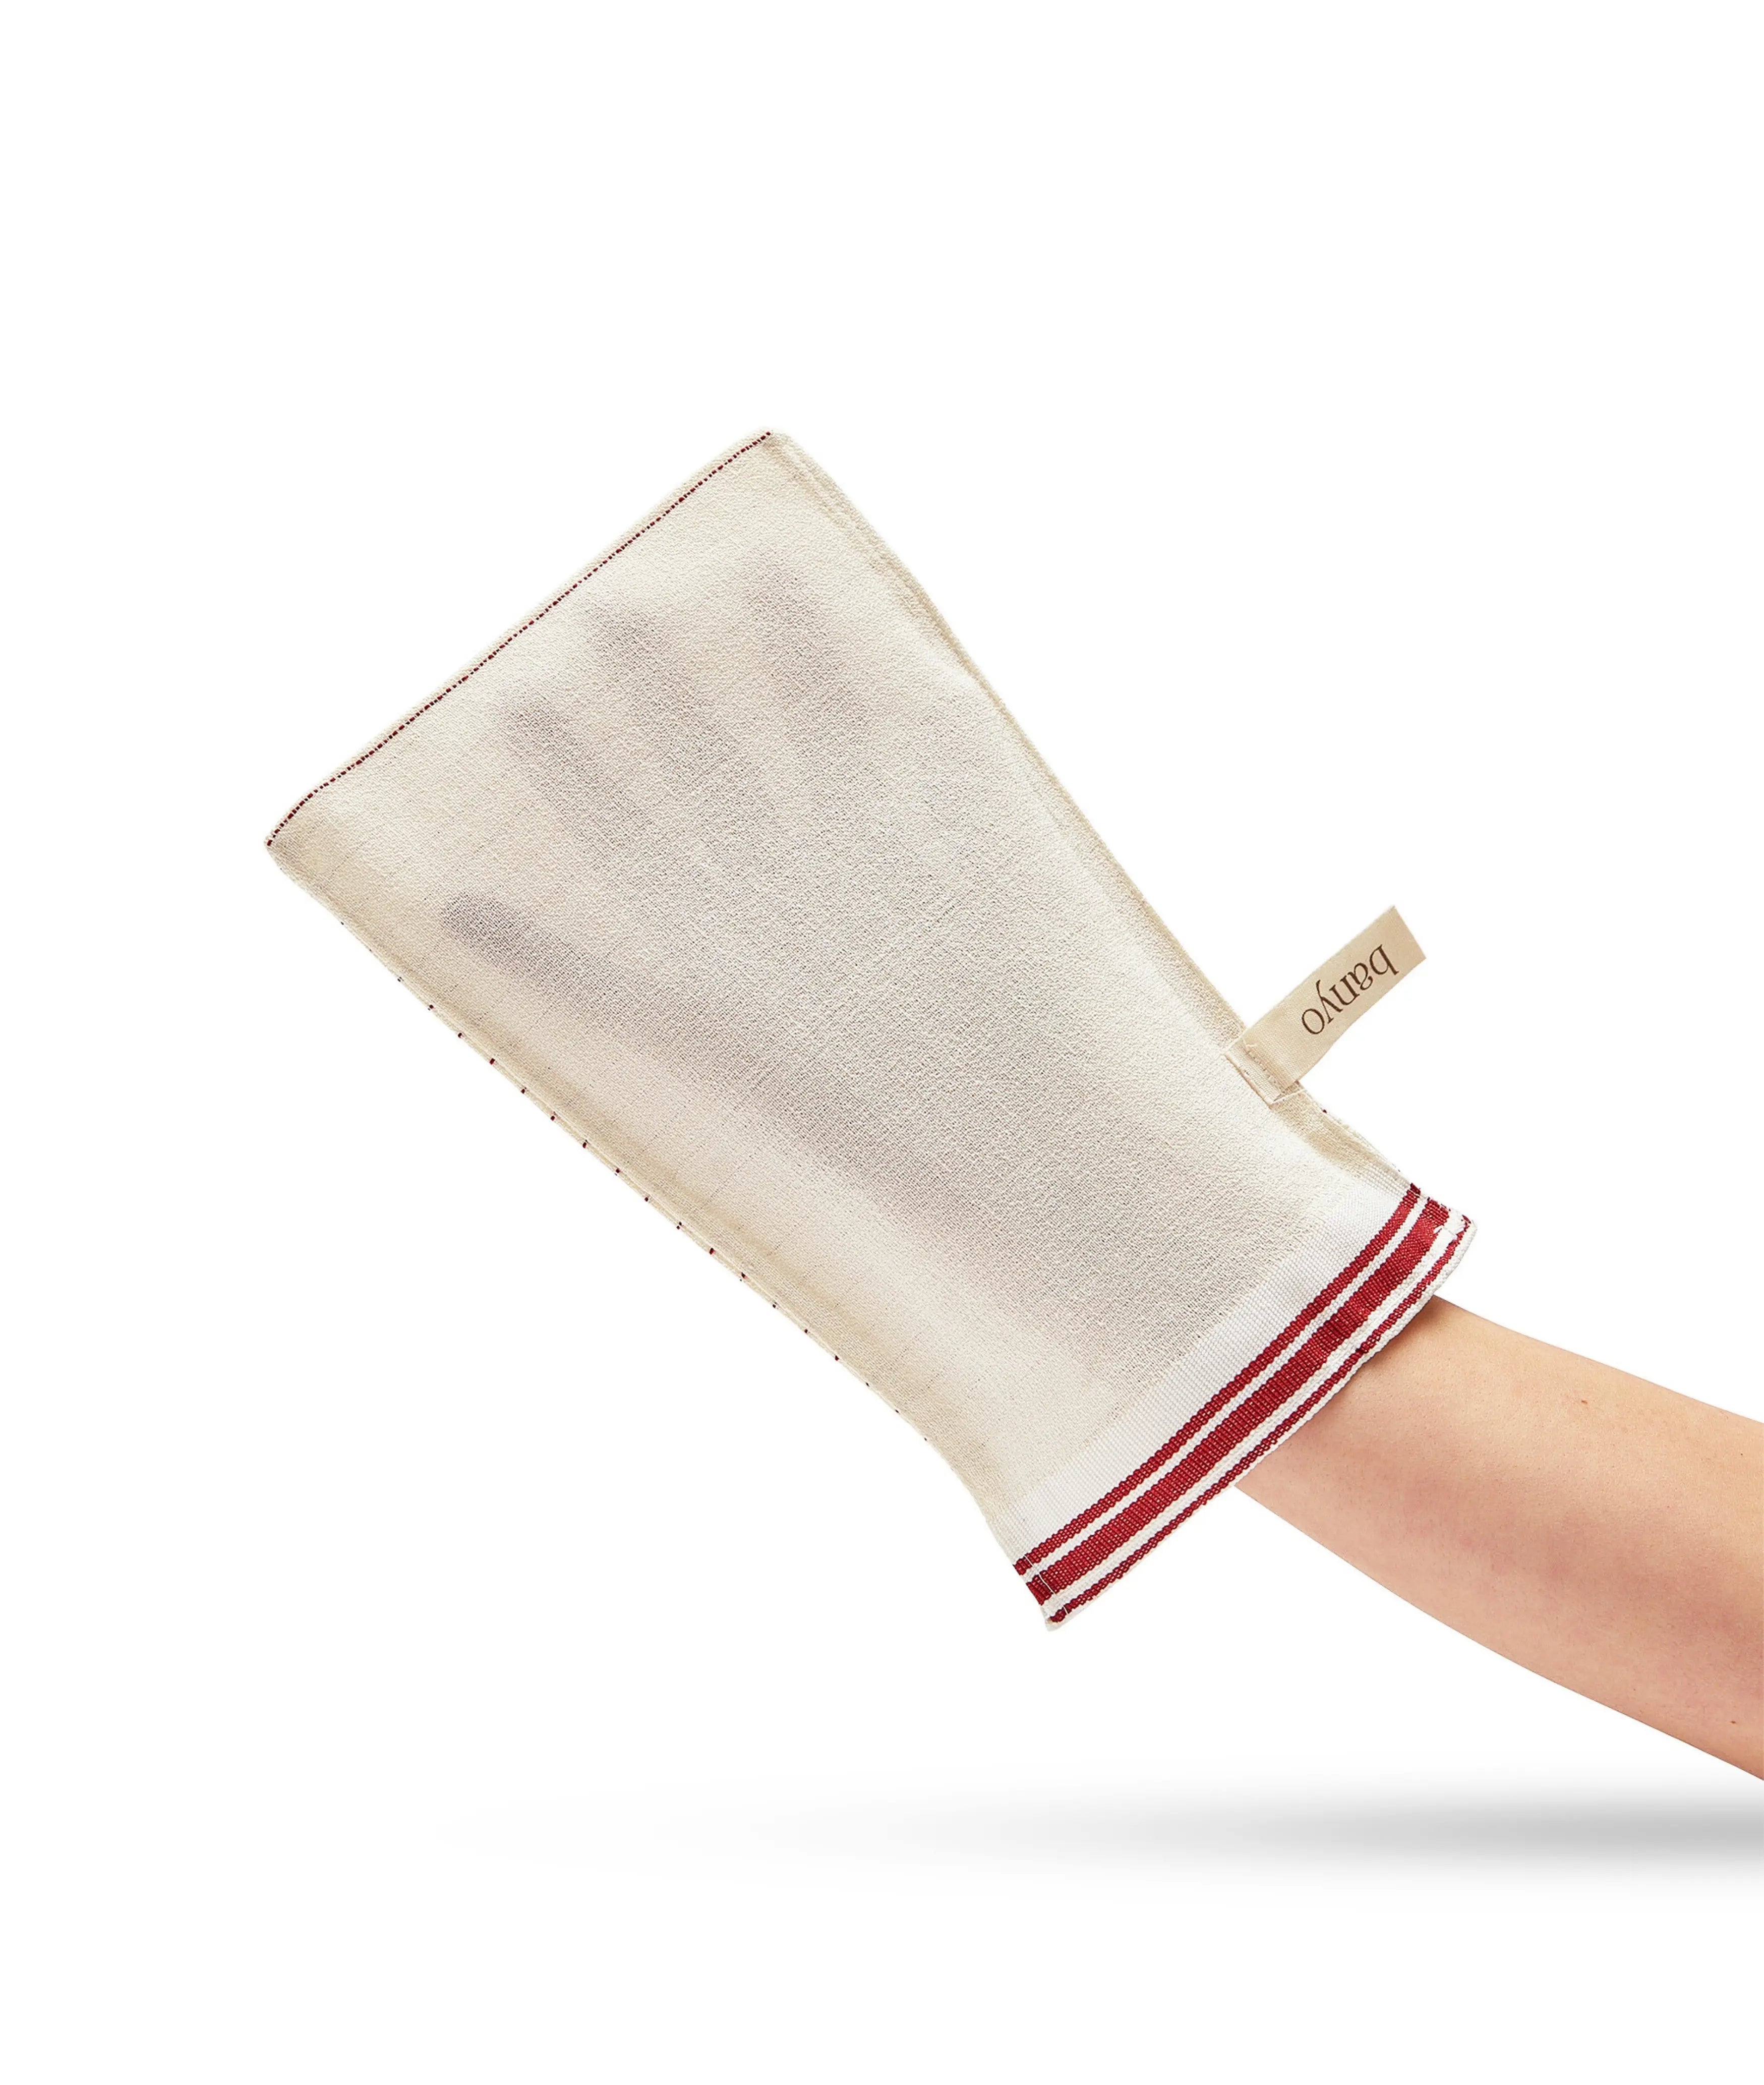 Exfoliating Body Glove | Normal Non-Sensitive Skin